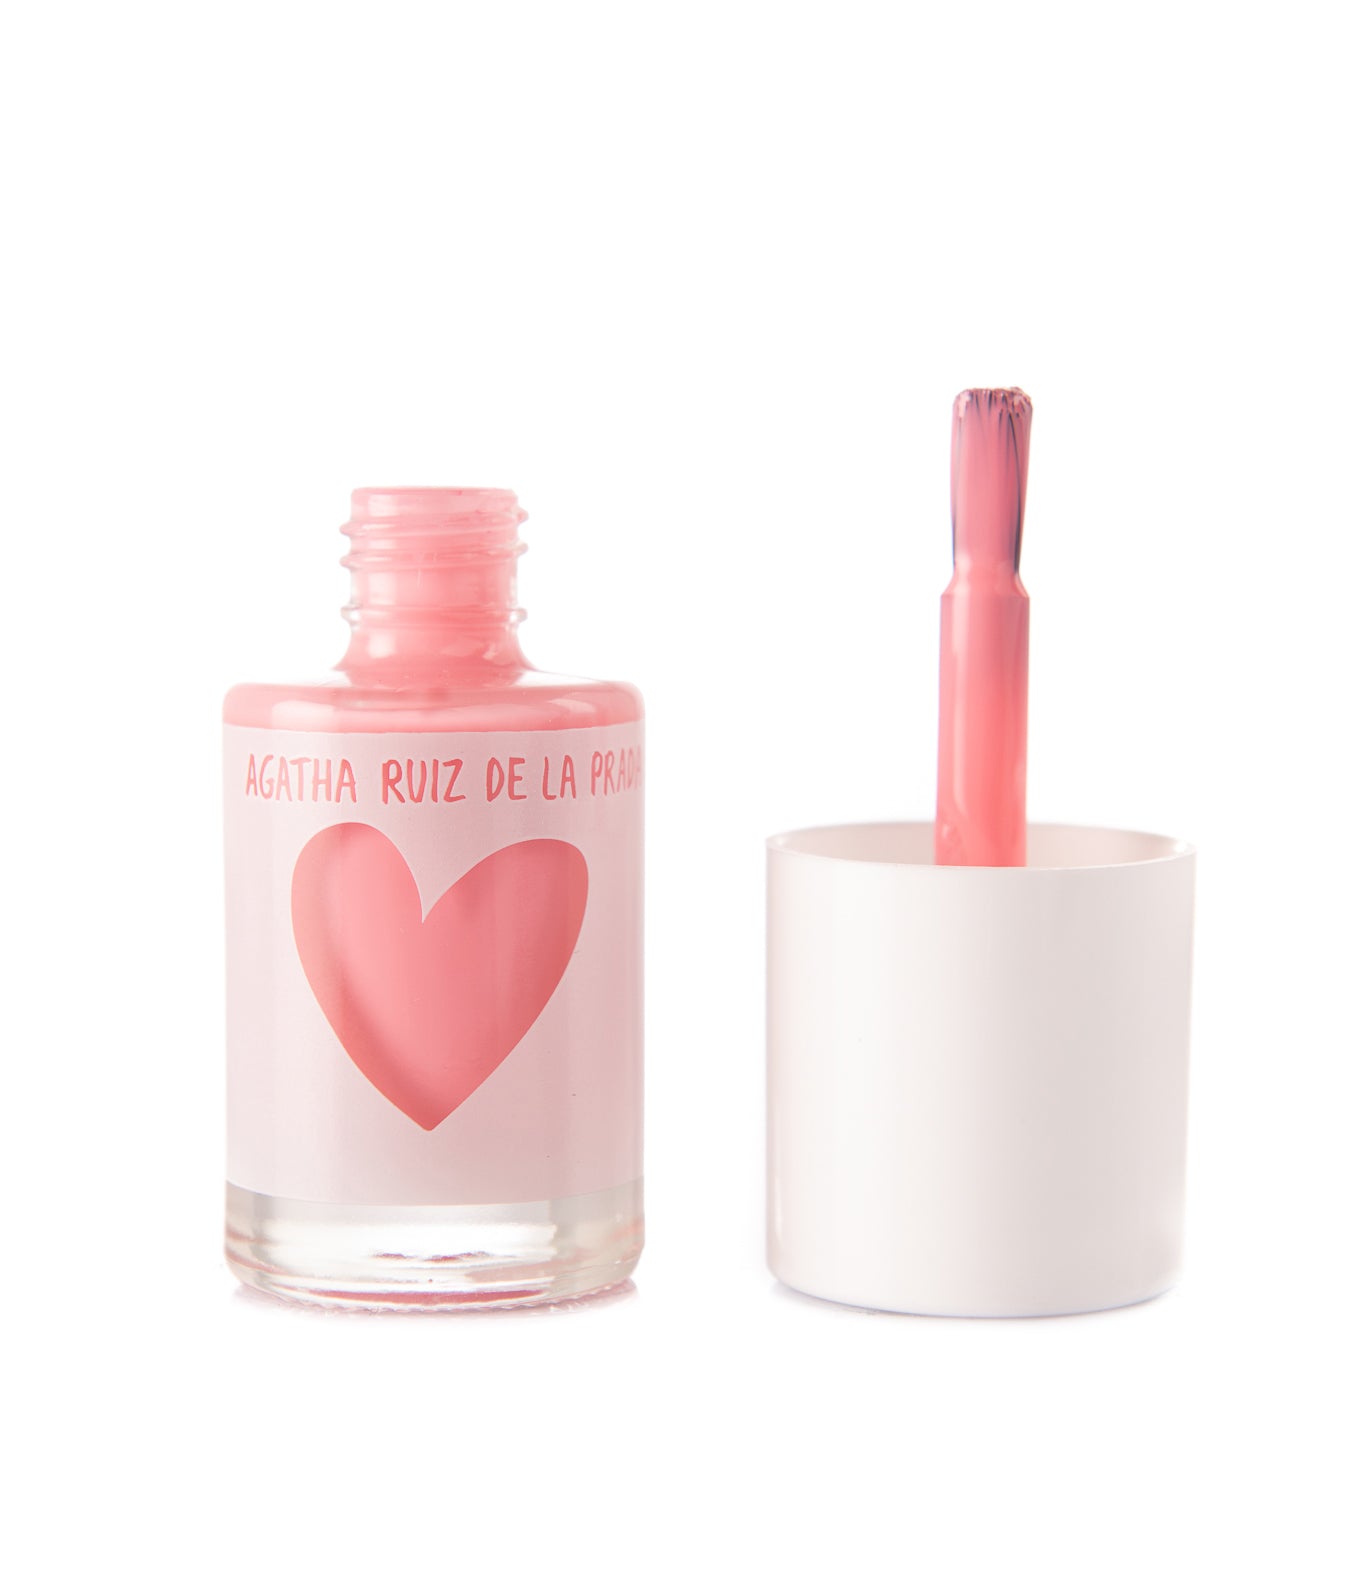 Agatha Ruiz de la Prada Nail Polish - Open Bottle with Cap and Brush Light Pink